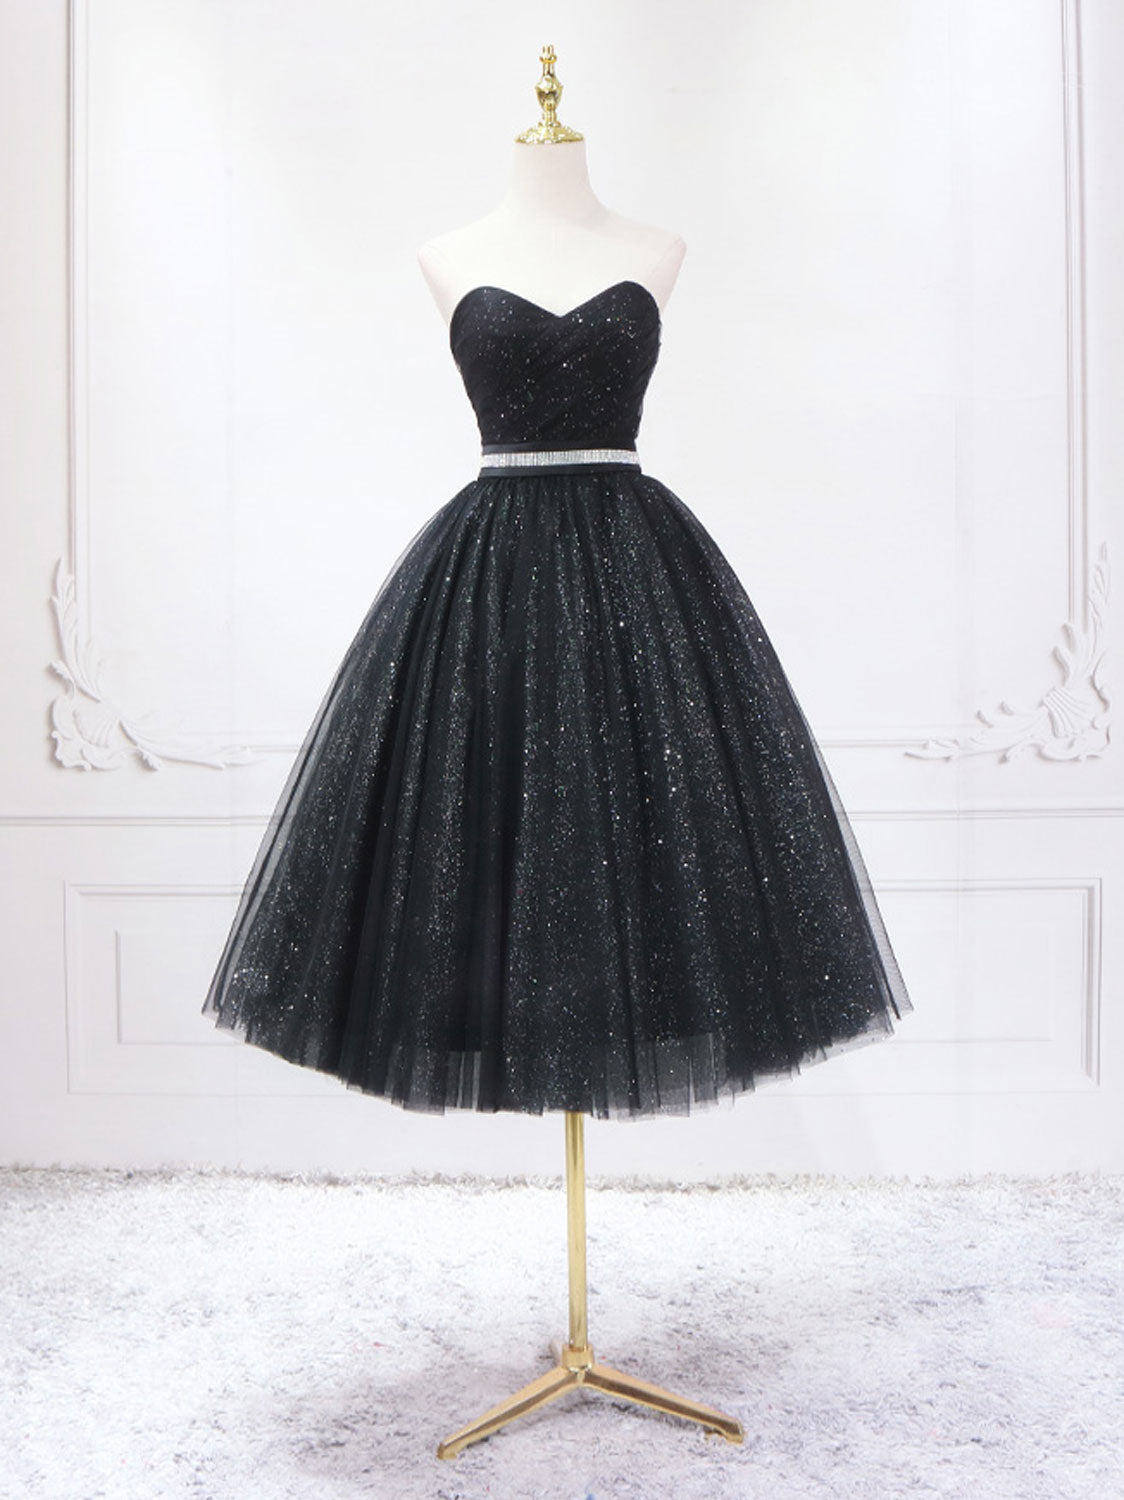 A-Line Sweetheart Neck Black Short Prom Dress Outfits For Girls, Black Formal Evening Dresses